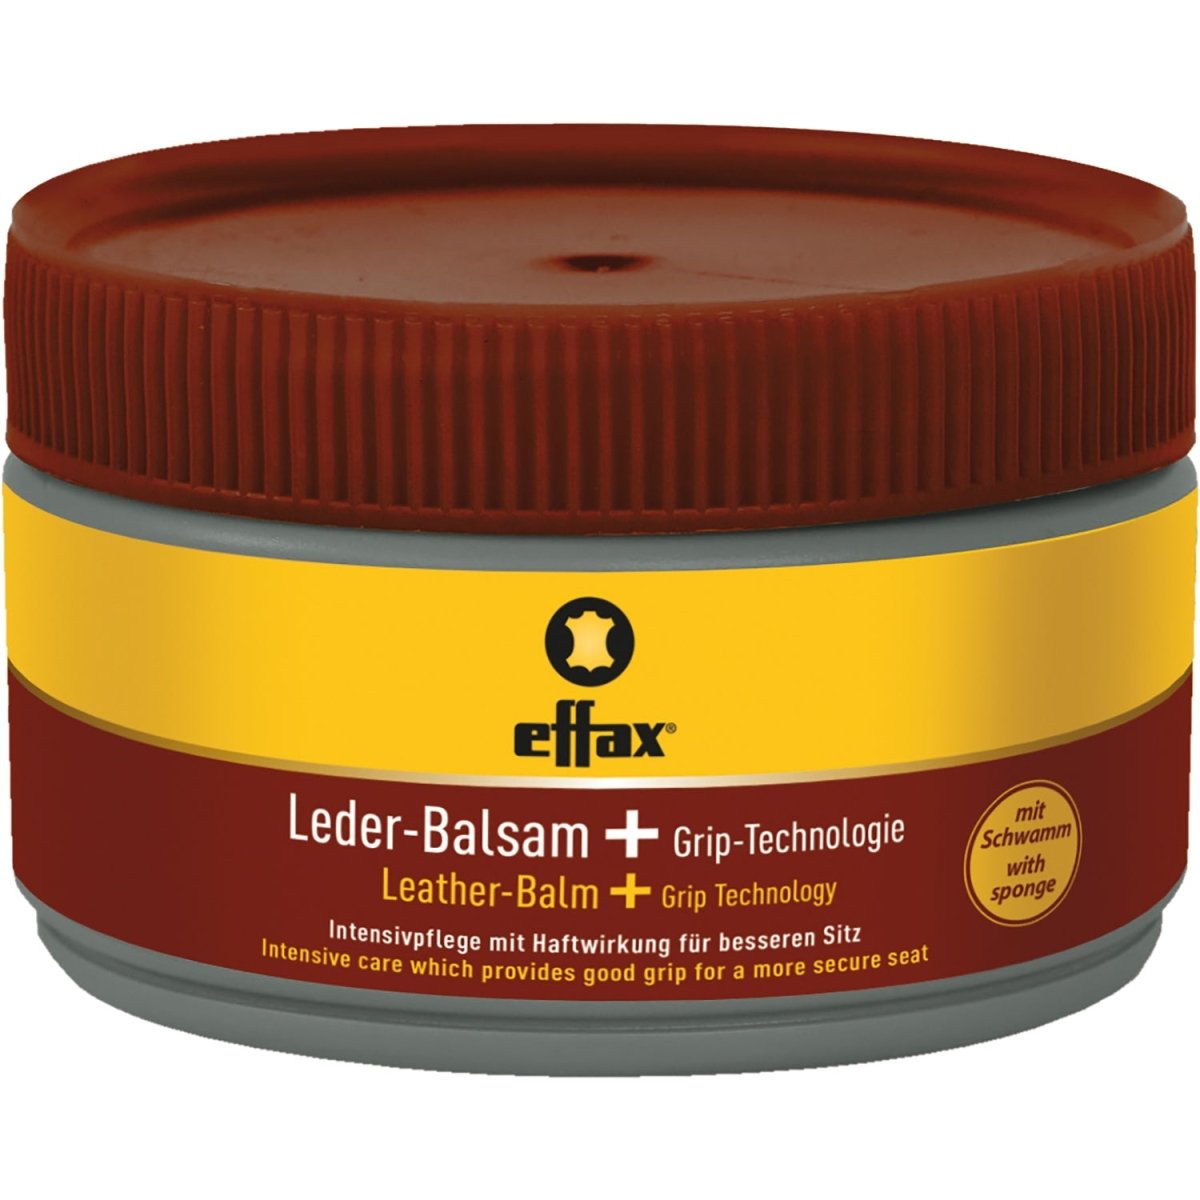 Effax Leather-Balm Plus Grip Technology - 250Ml -